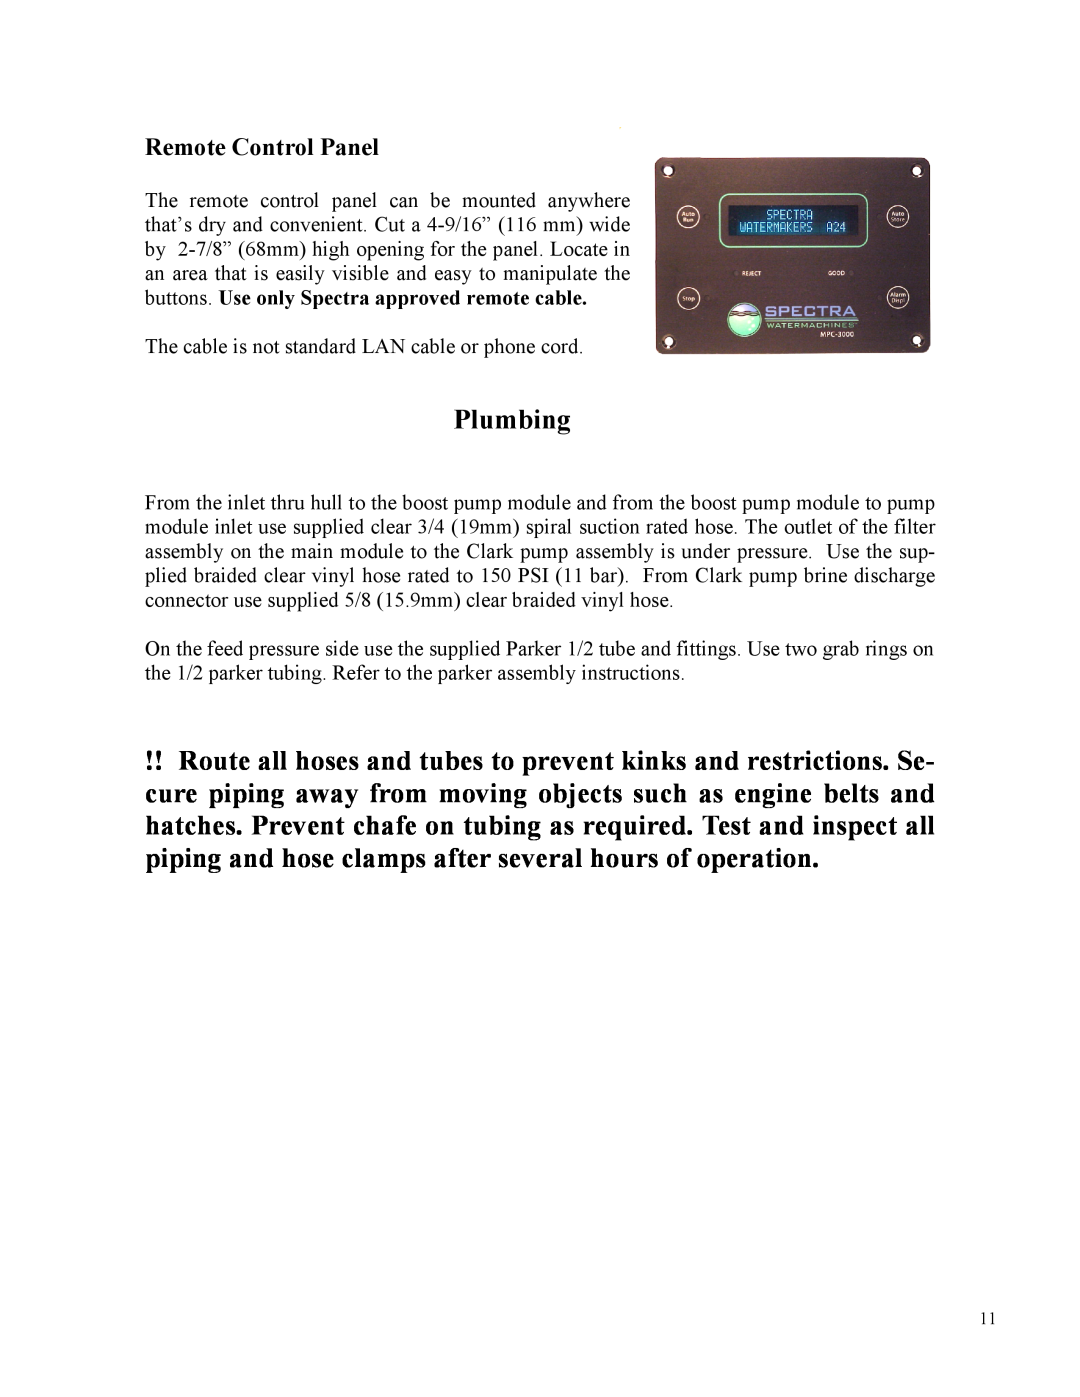 Spectra Watermakers Newport 400 owner manual Plumbing, Remote Control Panel 